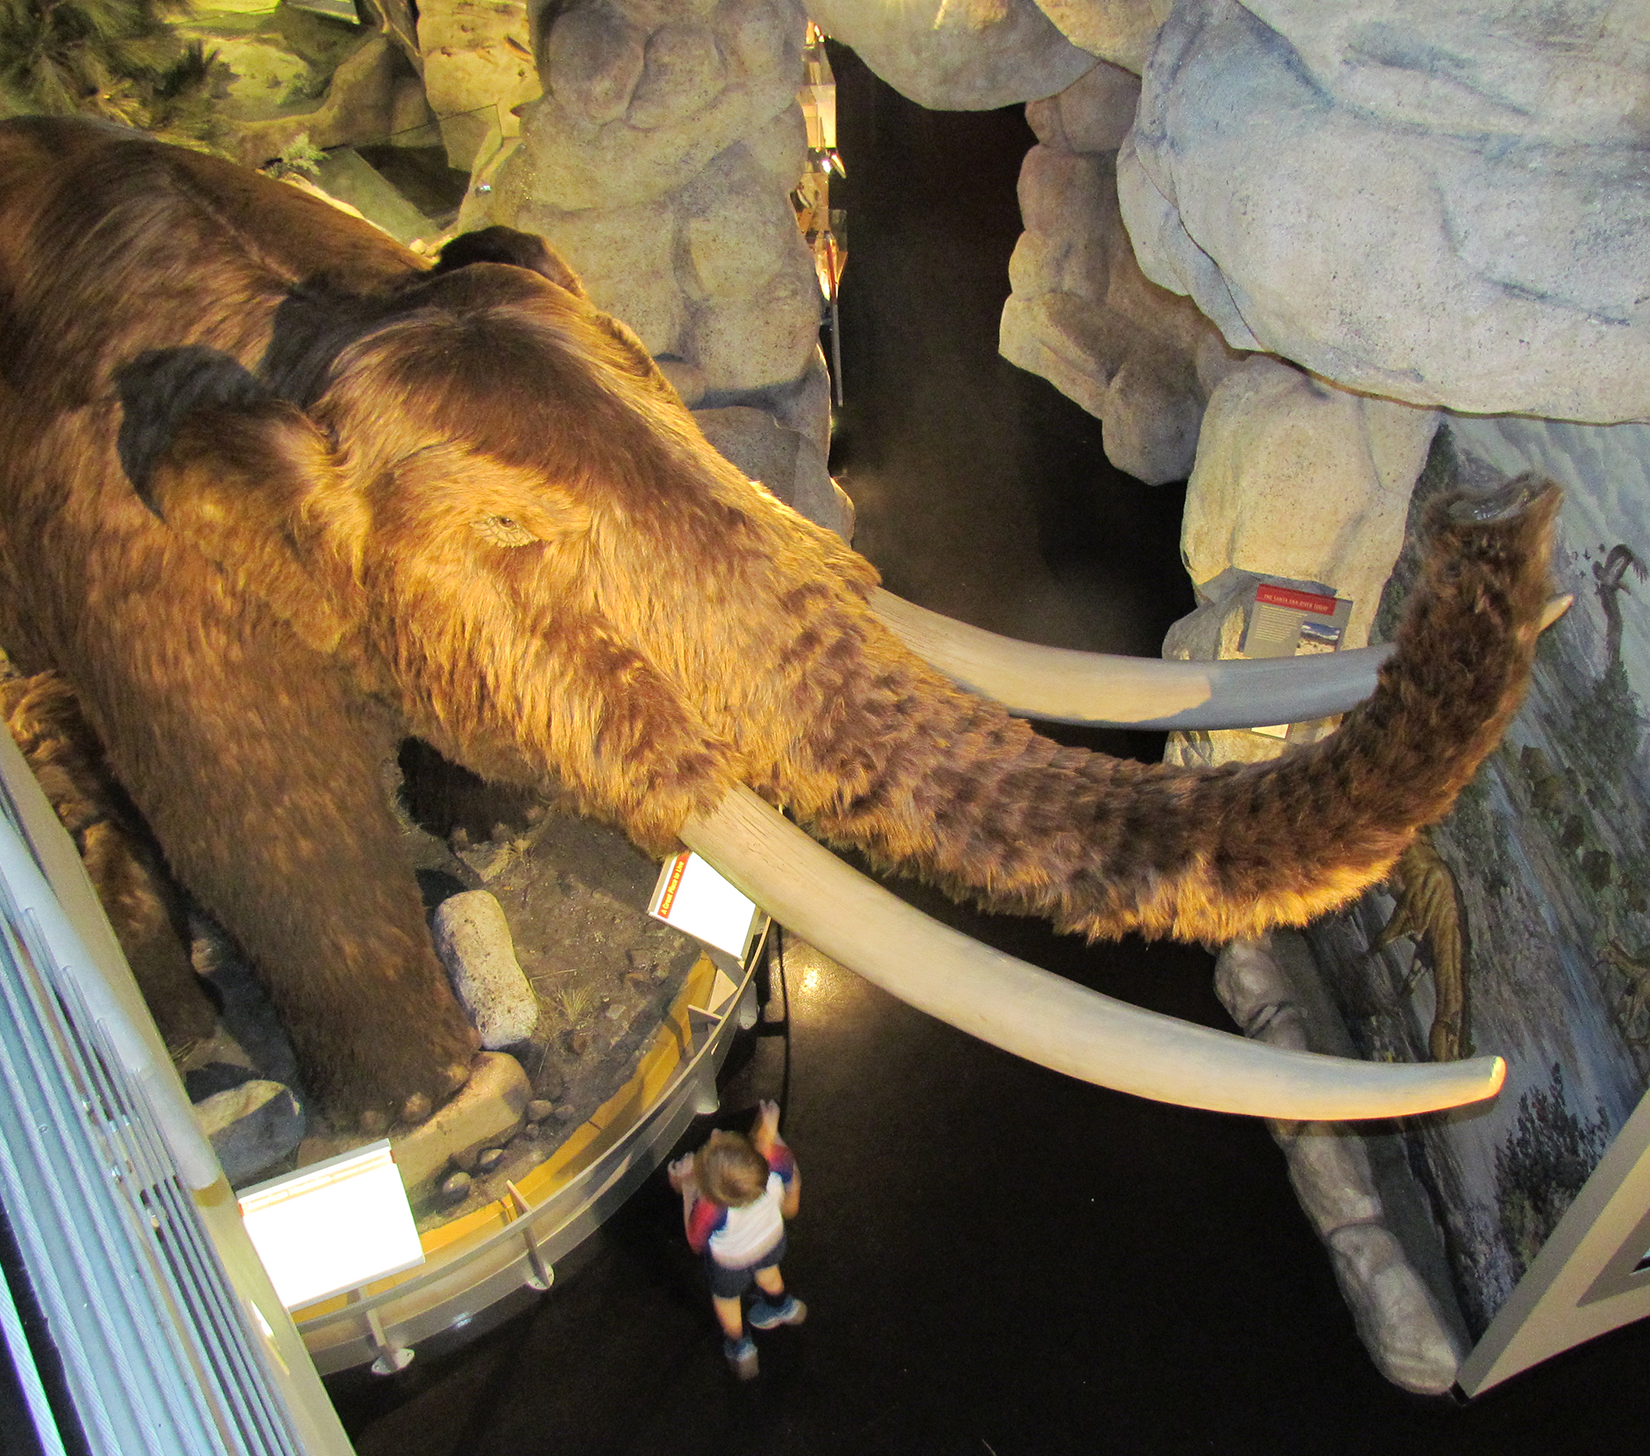 Overhead view of mastodon